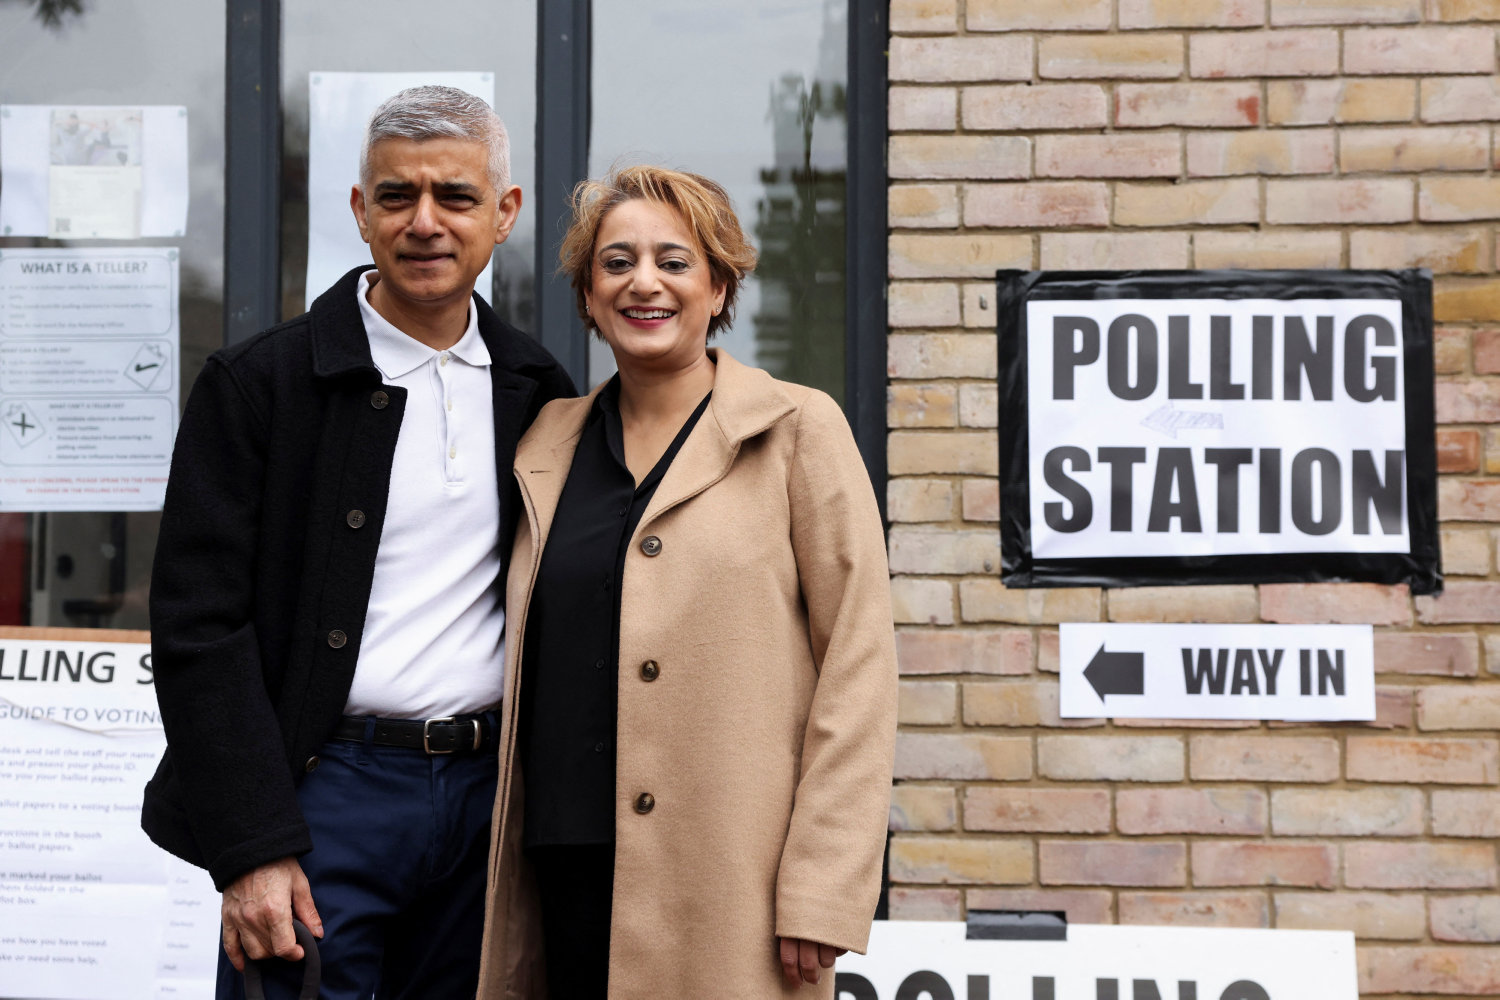 sadiq khan vinder kamp om borgmesterposten i london